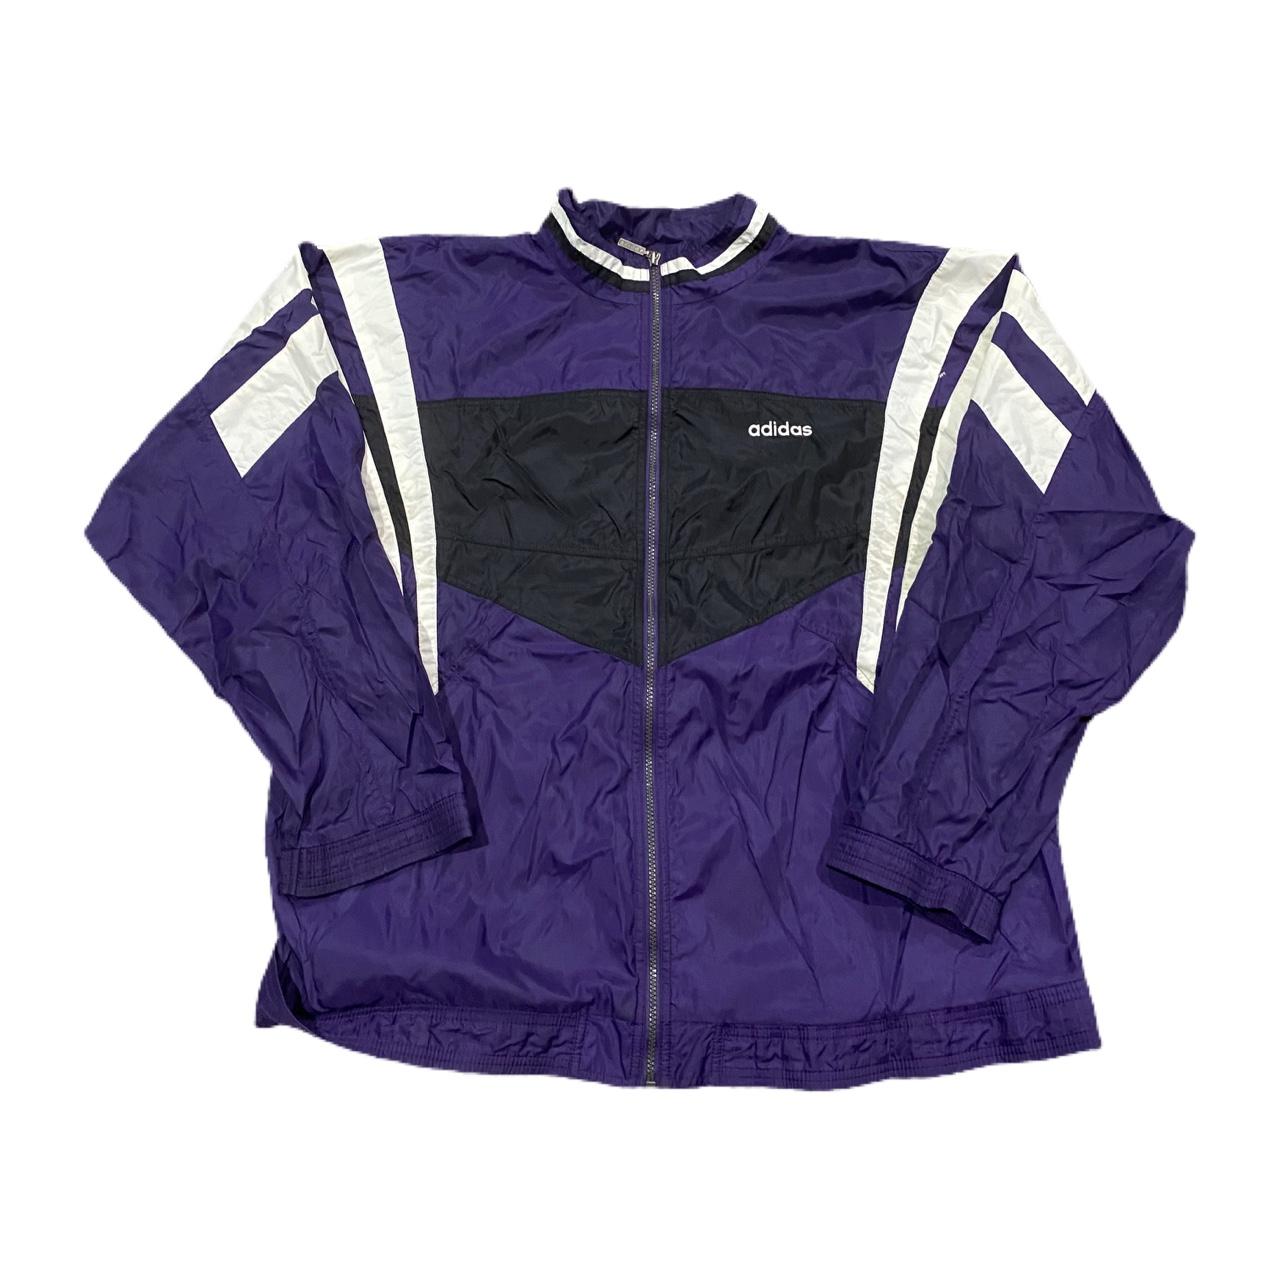 Adidas Men's Black and Purple Jacket | Depop